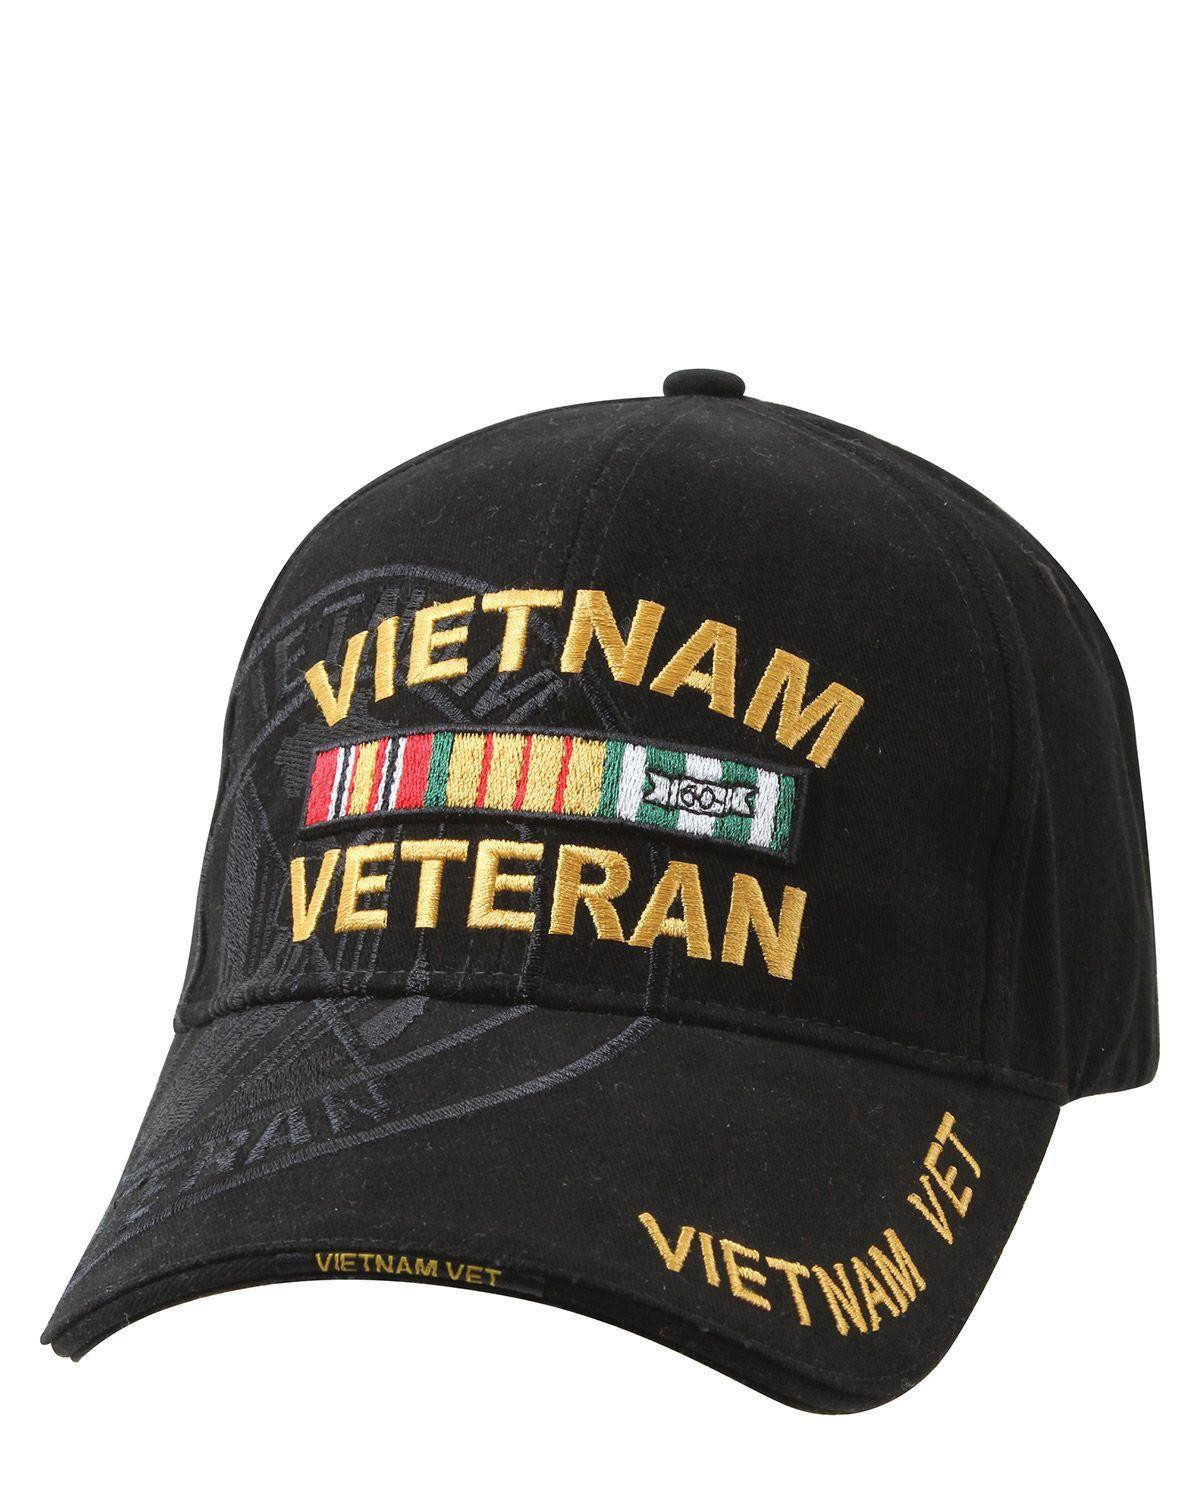 Rothco Deluxe Low Profile Shadow Caps - 'Vietnam Veteran' (Sort m.Vietnam Veteran, One Size)